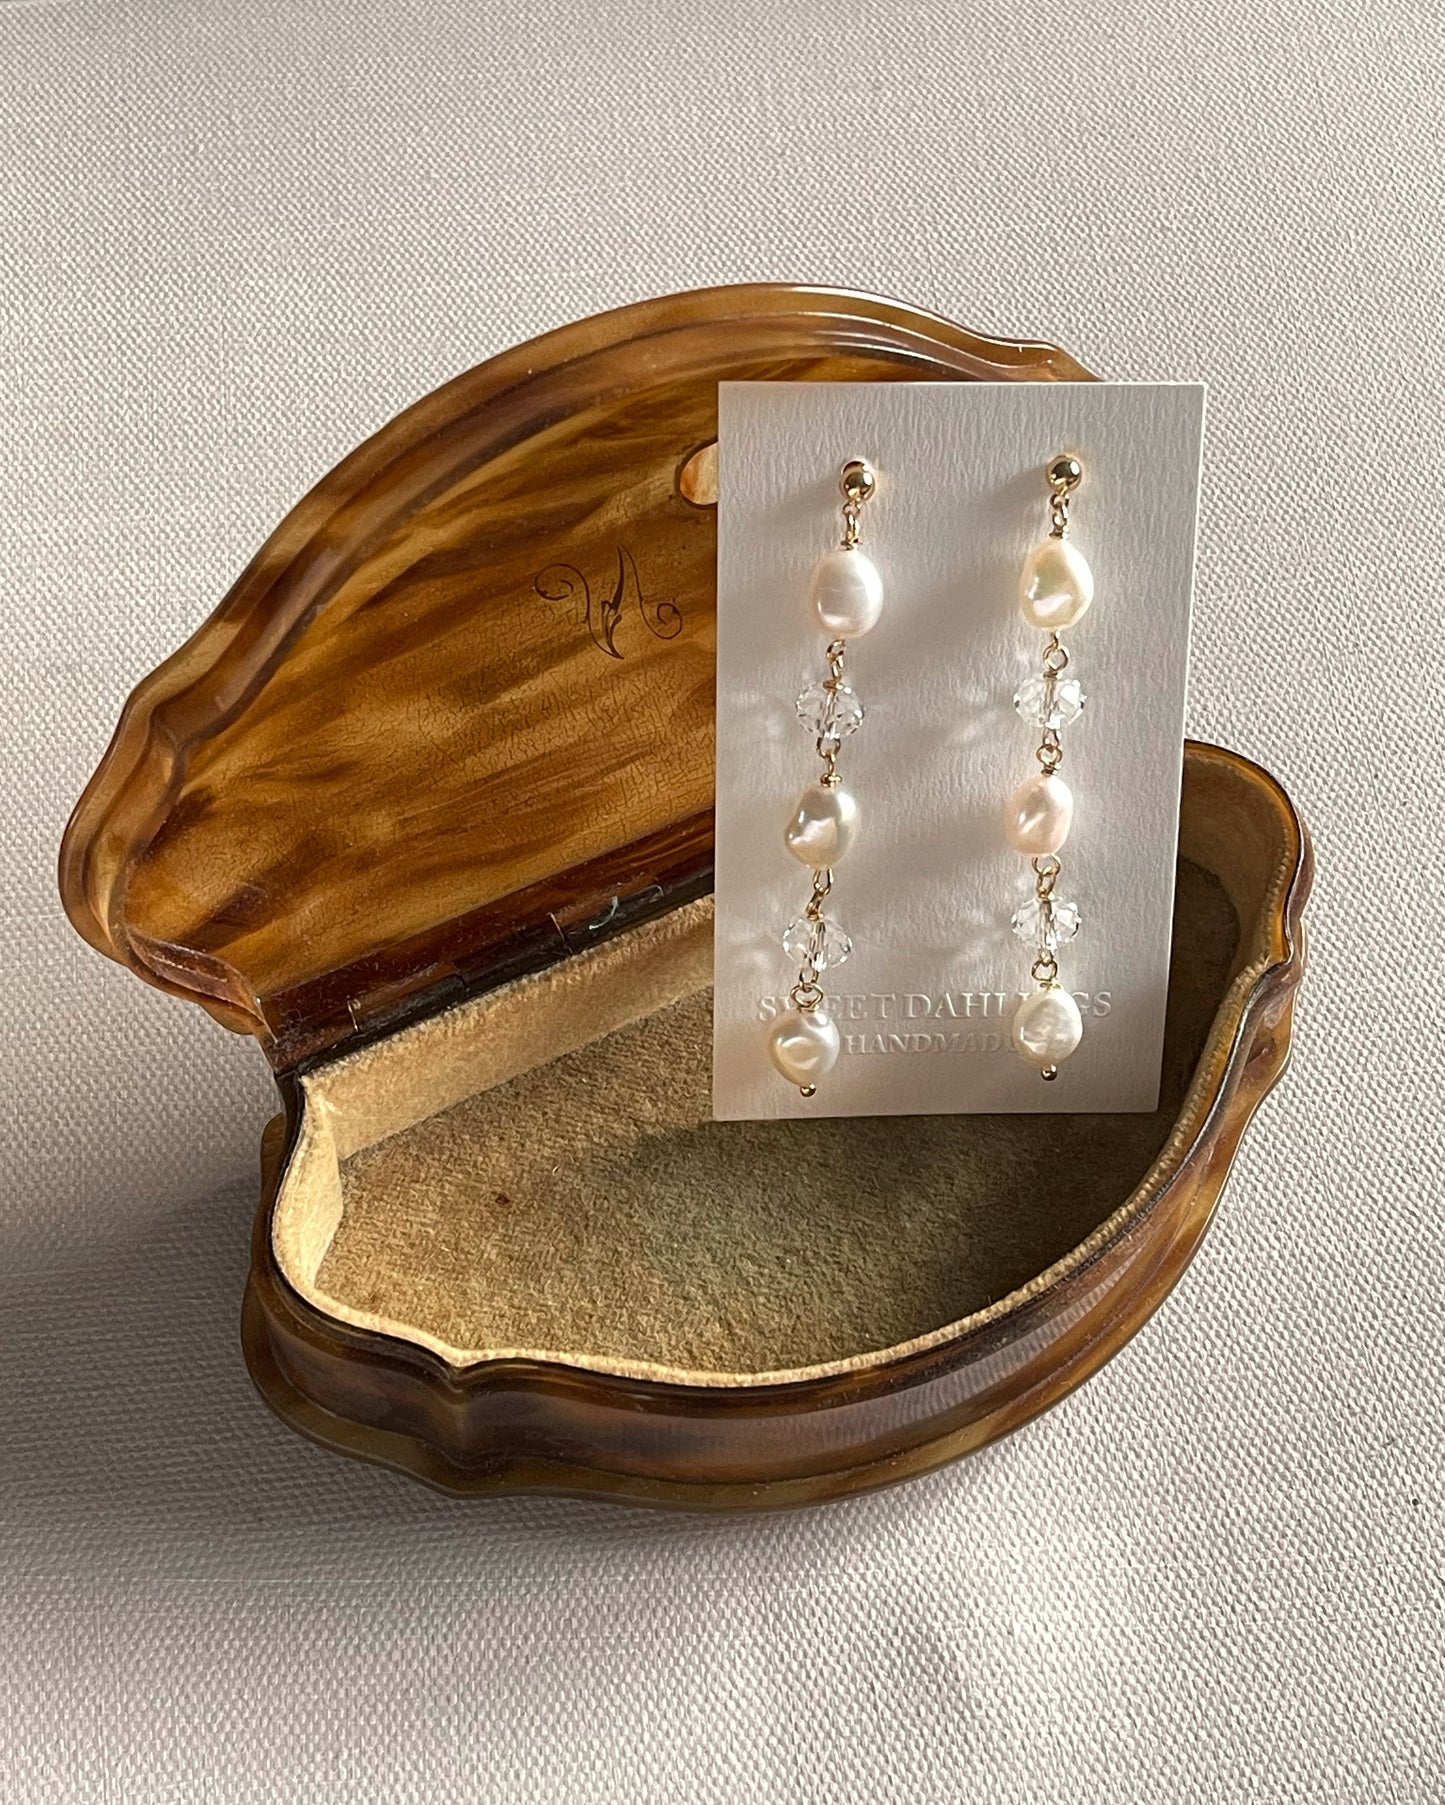 The chandelier earrings in white freshwater pearls